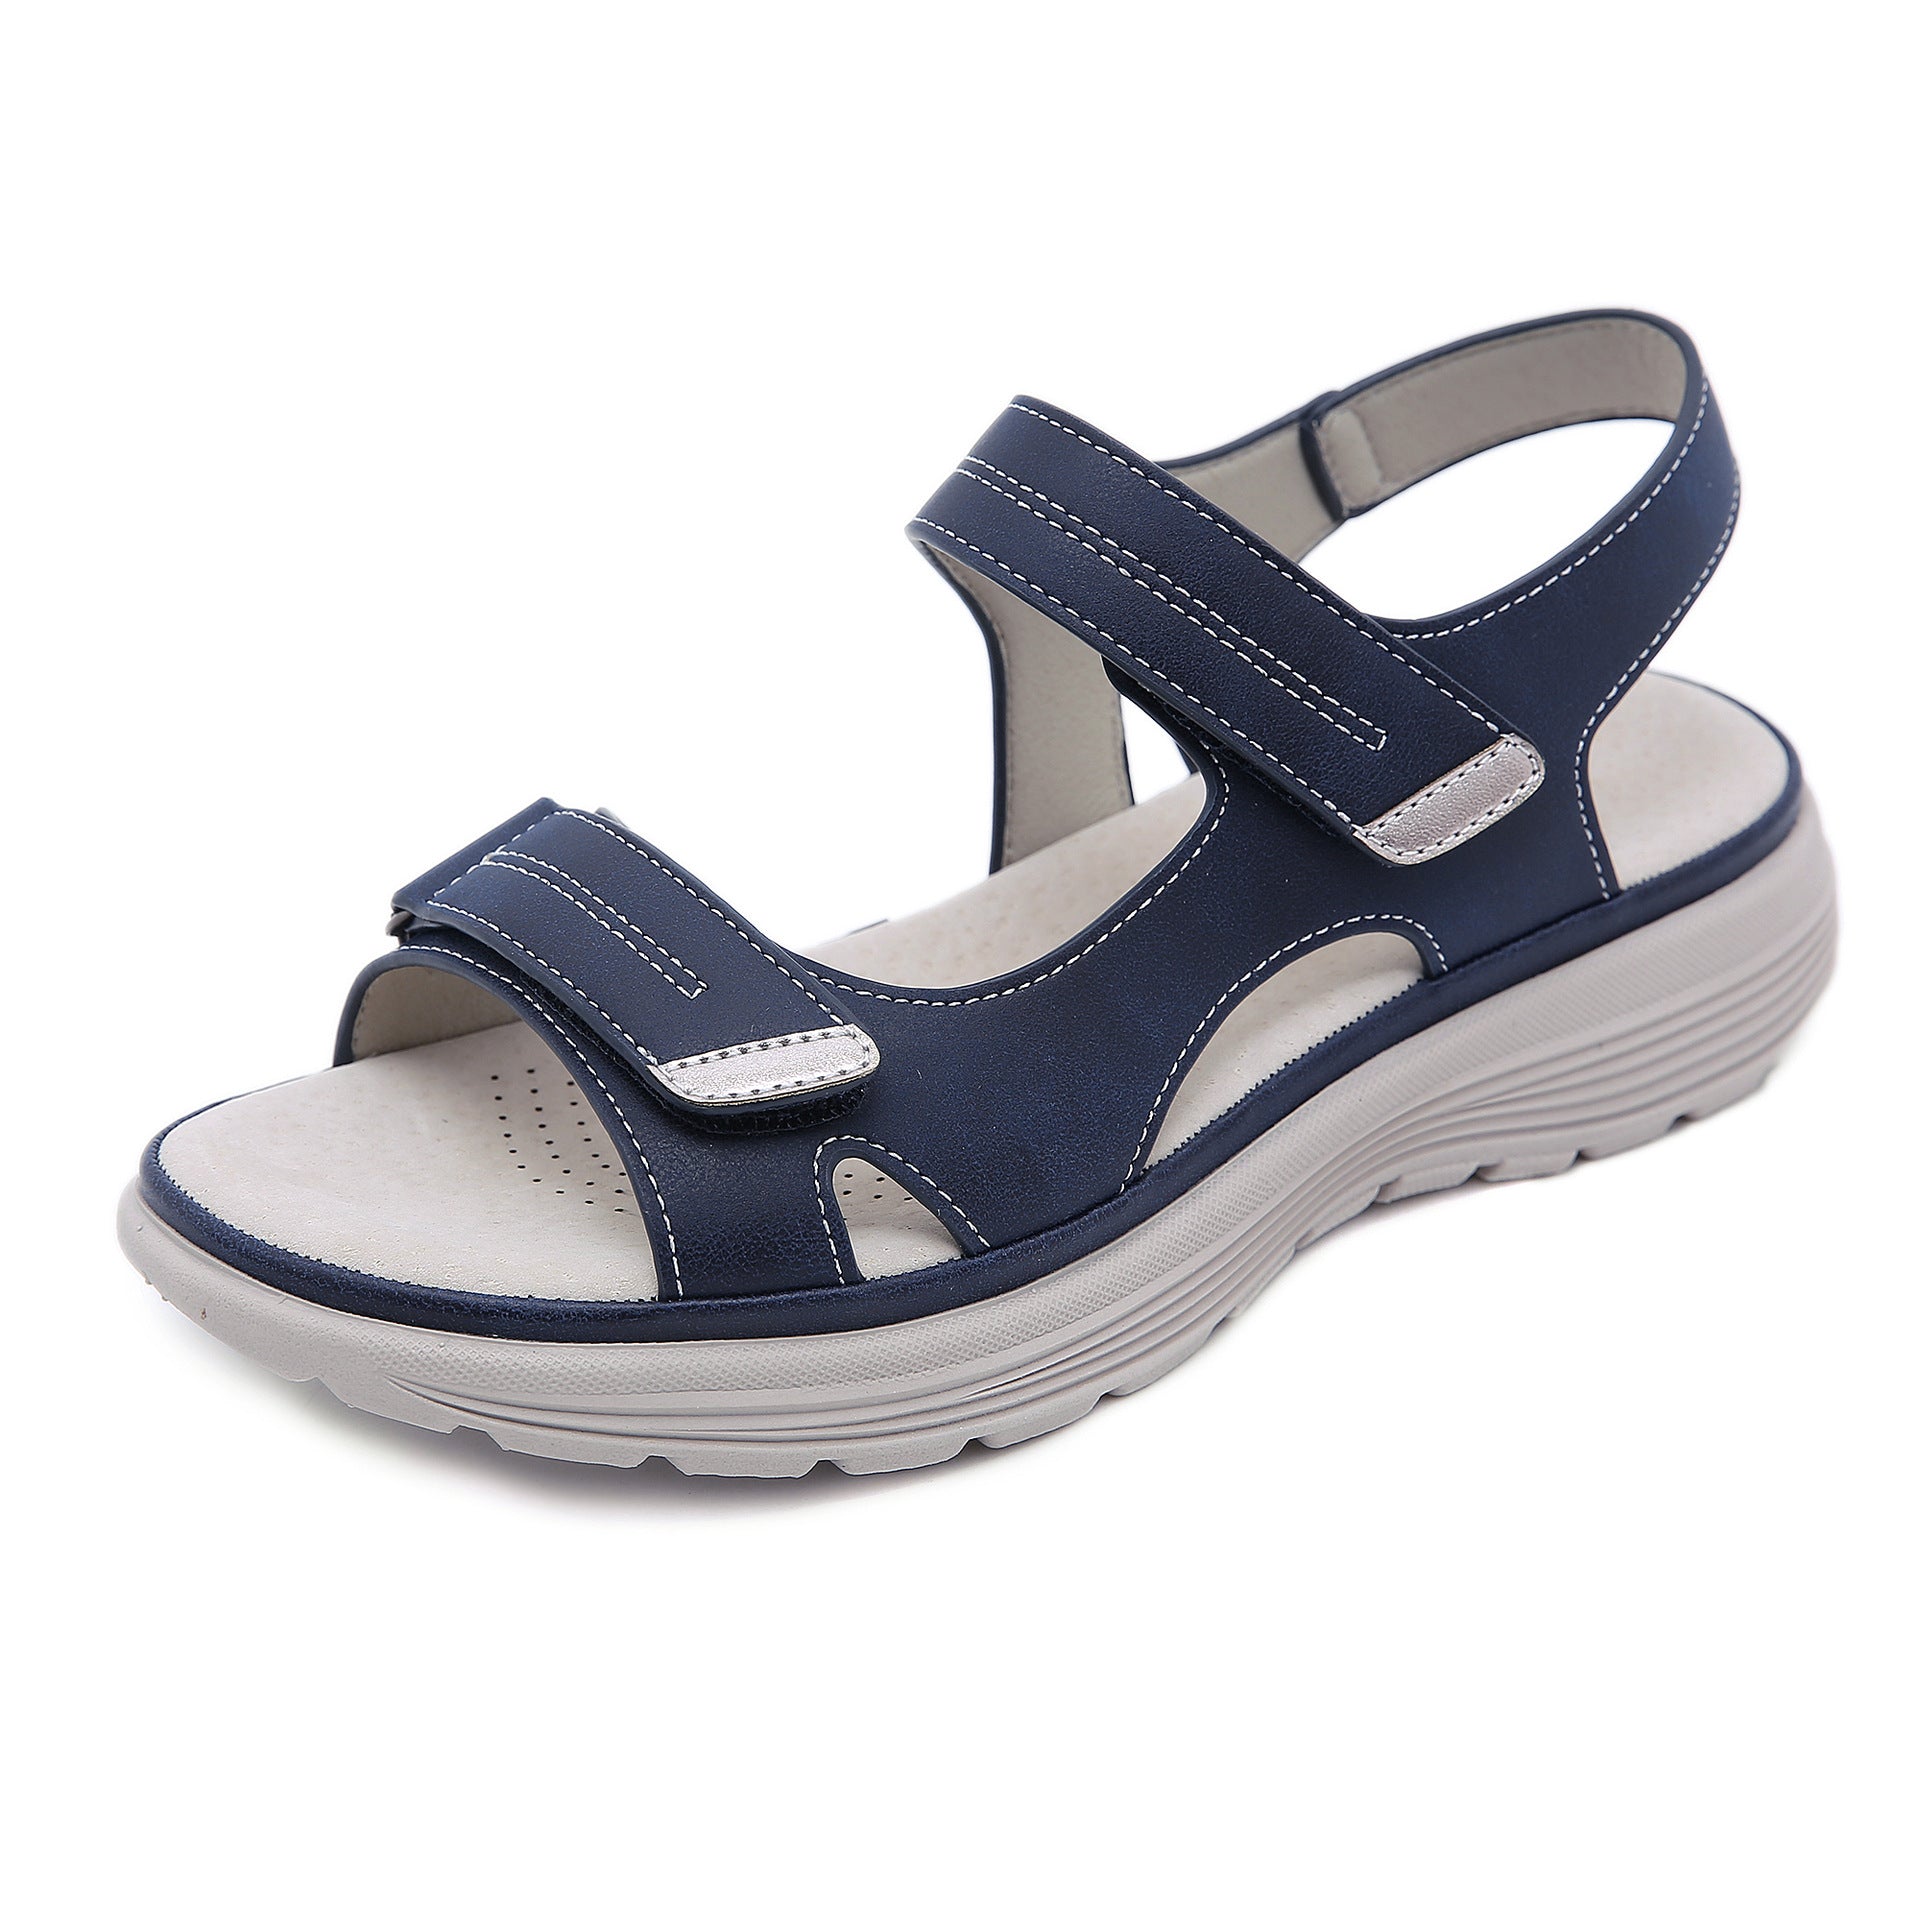 Slip-on Wedge Sandals